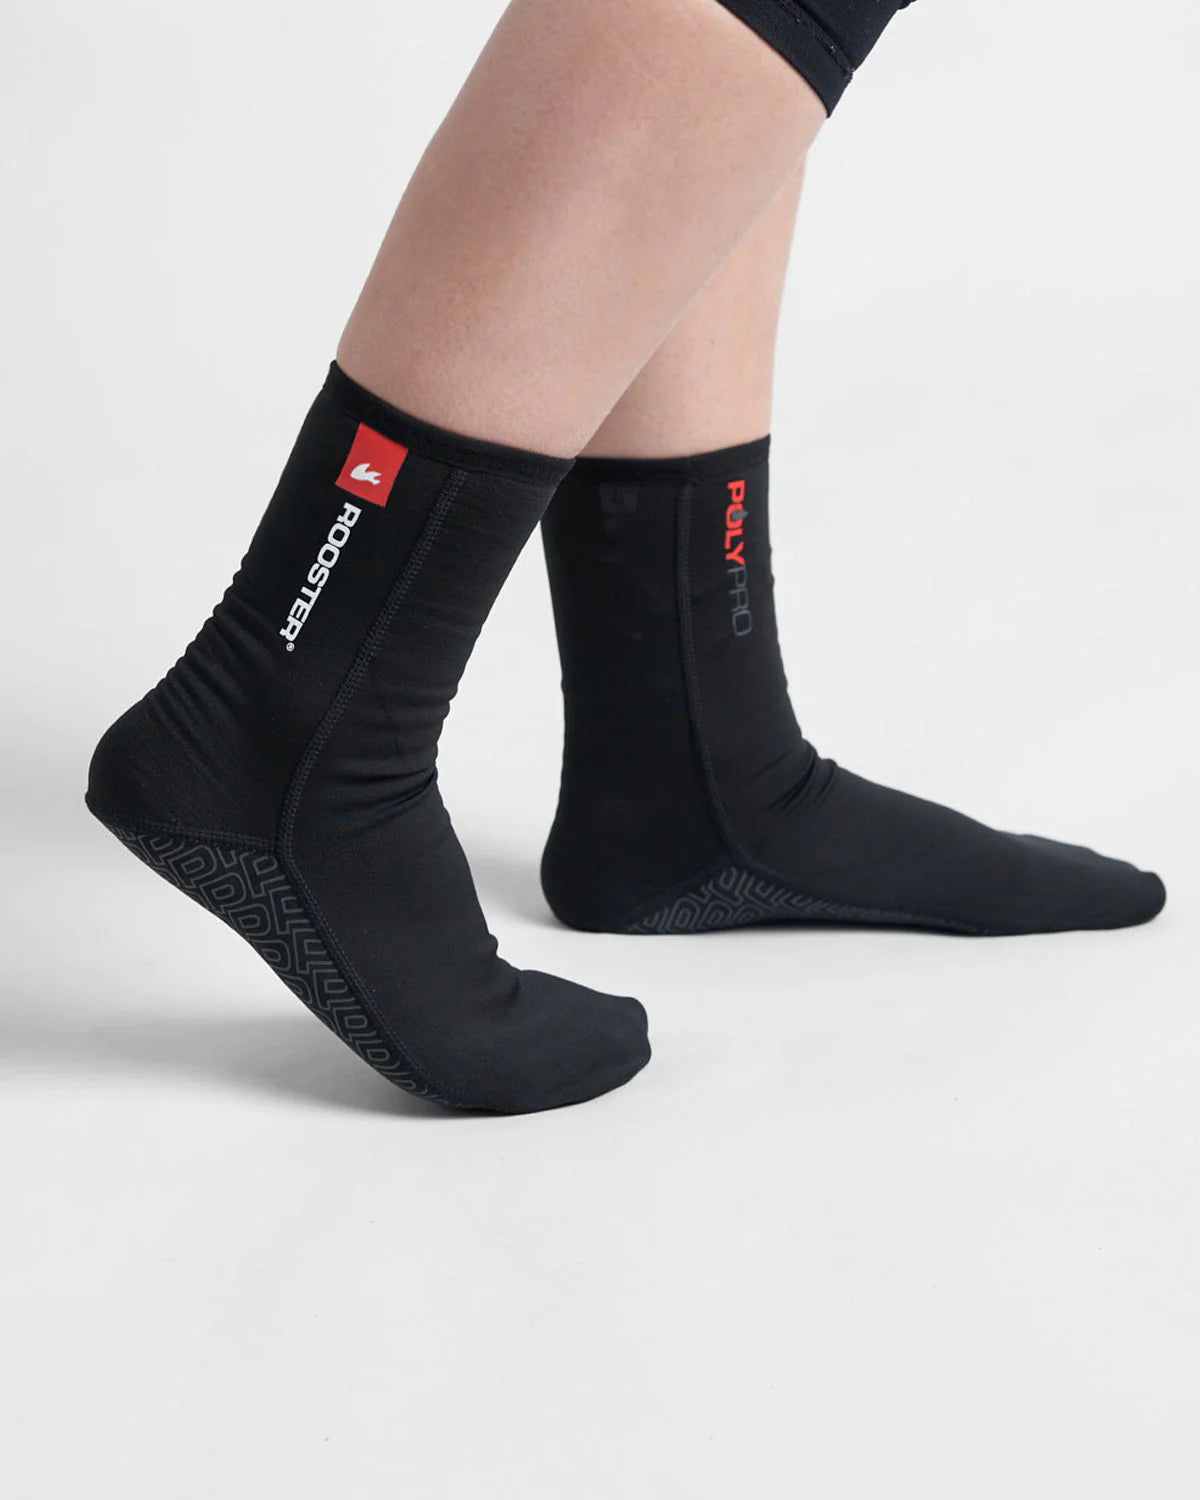 Calzino PolyPro Socks